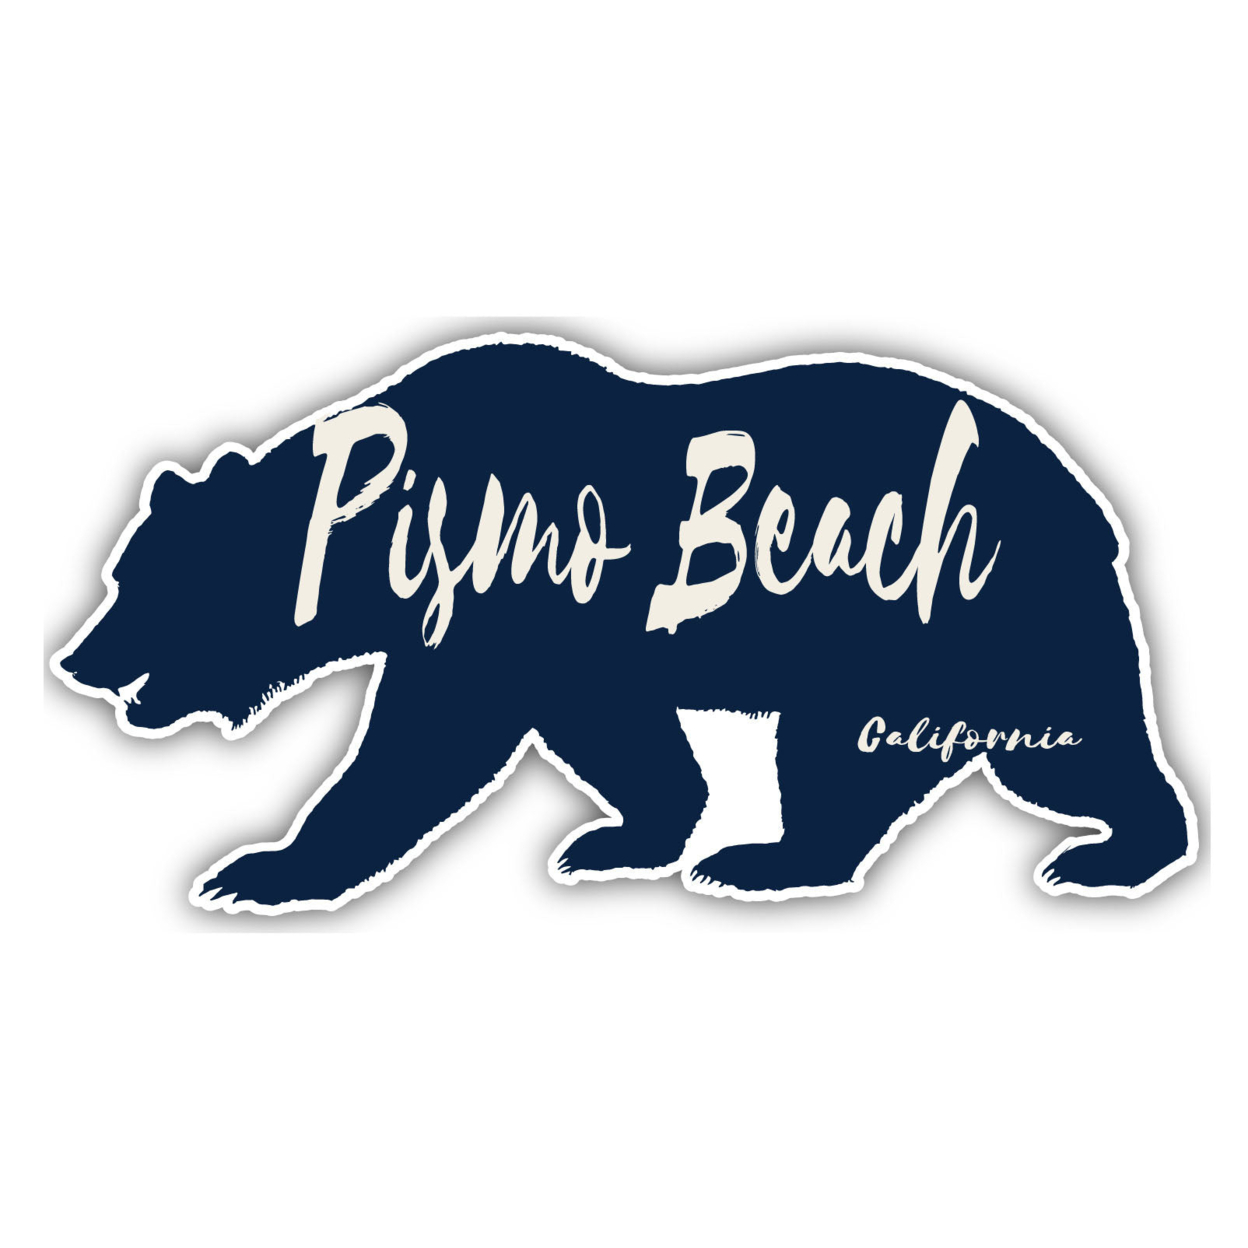 Pismo Beach California Souvenir Decorative Stickers (Choose Theme And Size) - Single Unit, 2-Inch, Tent